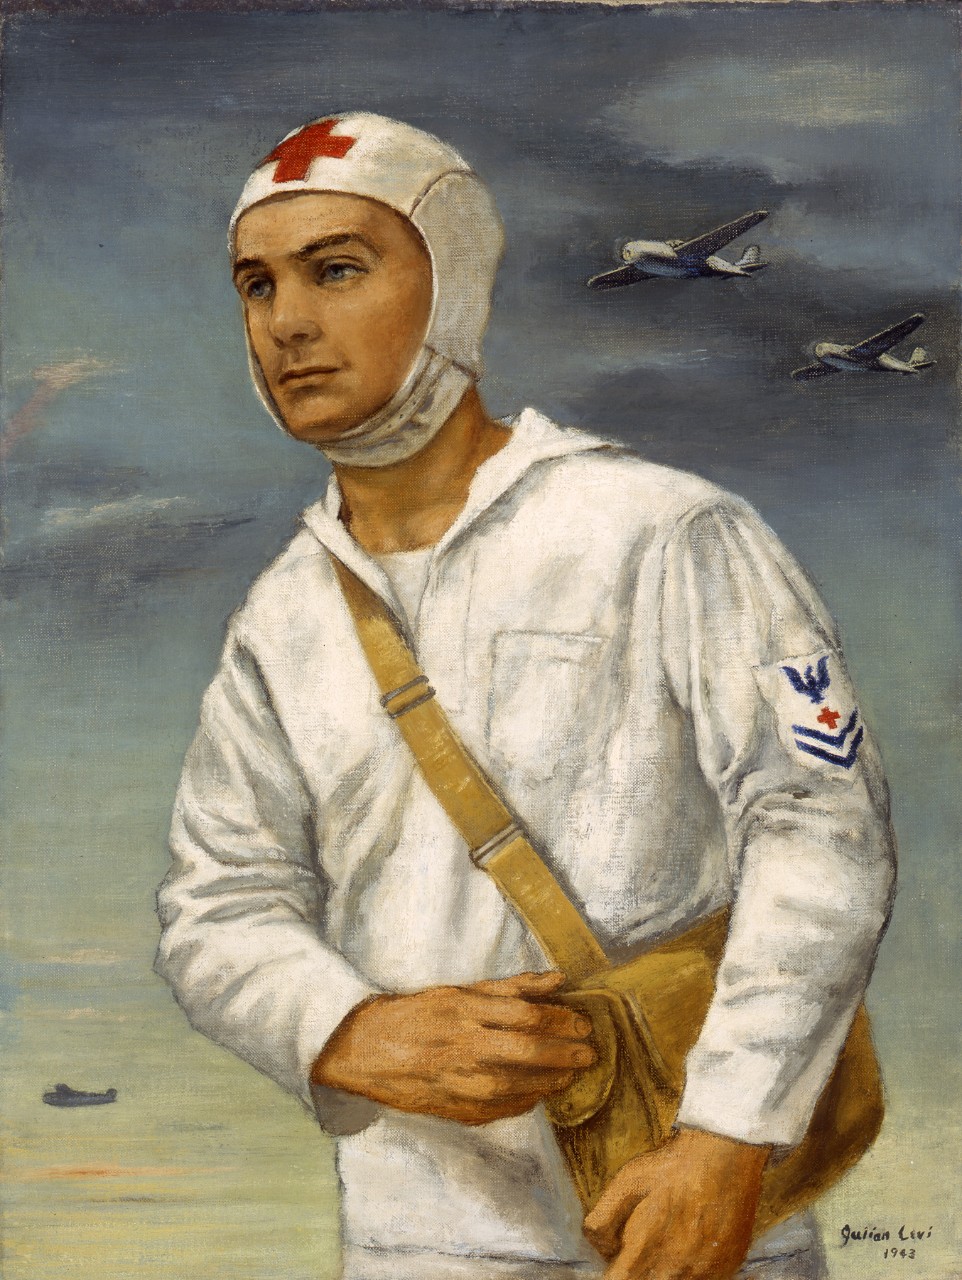 A portrait of a corpsman on an aircraft carrier